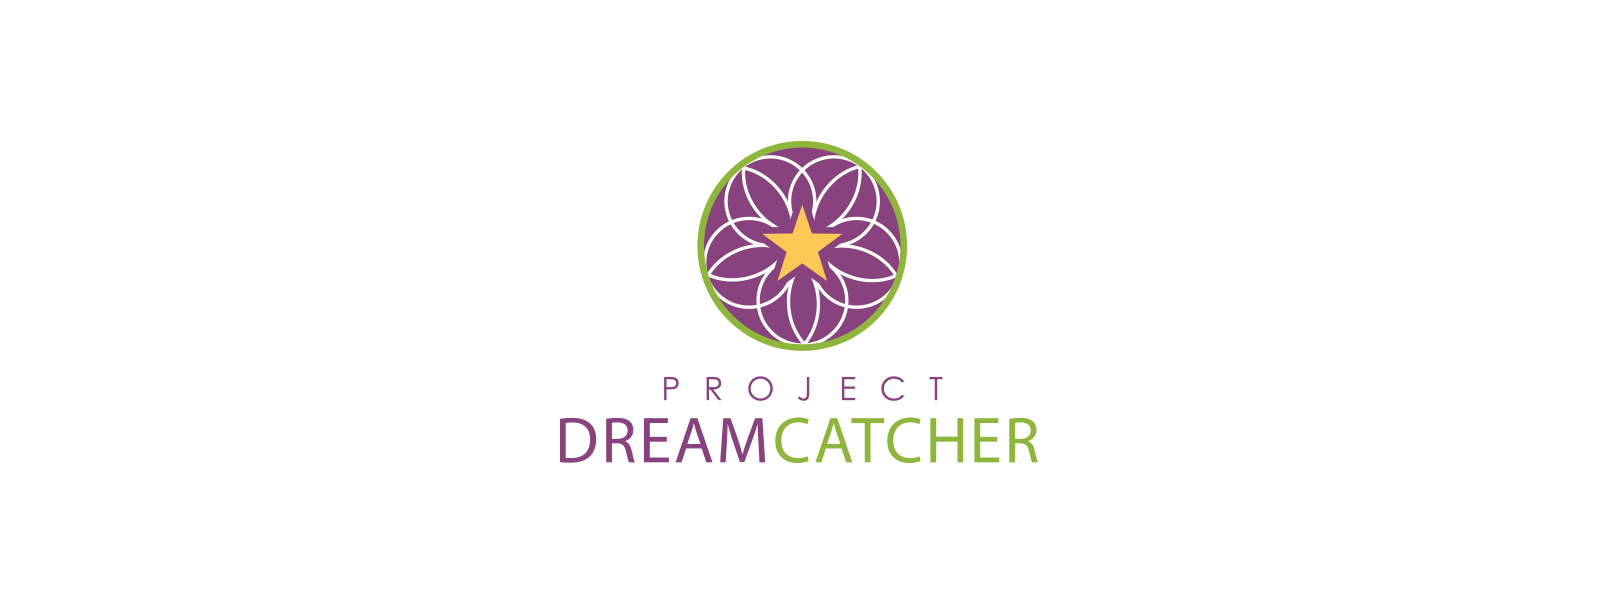 Project Dreamcatcher logo